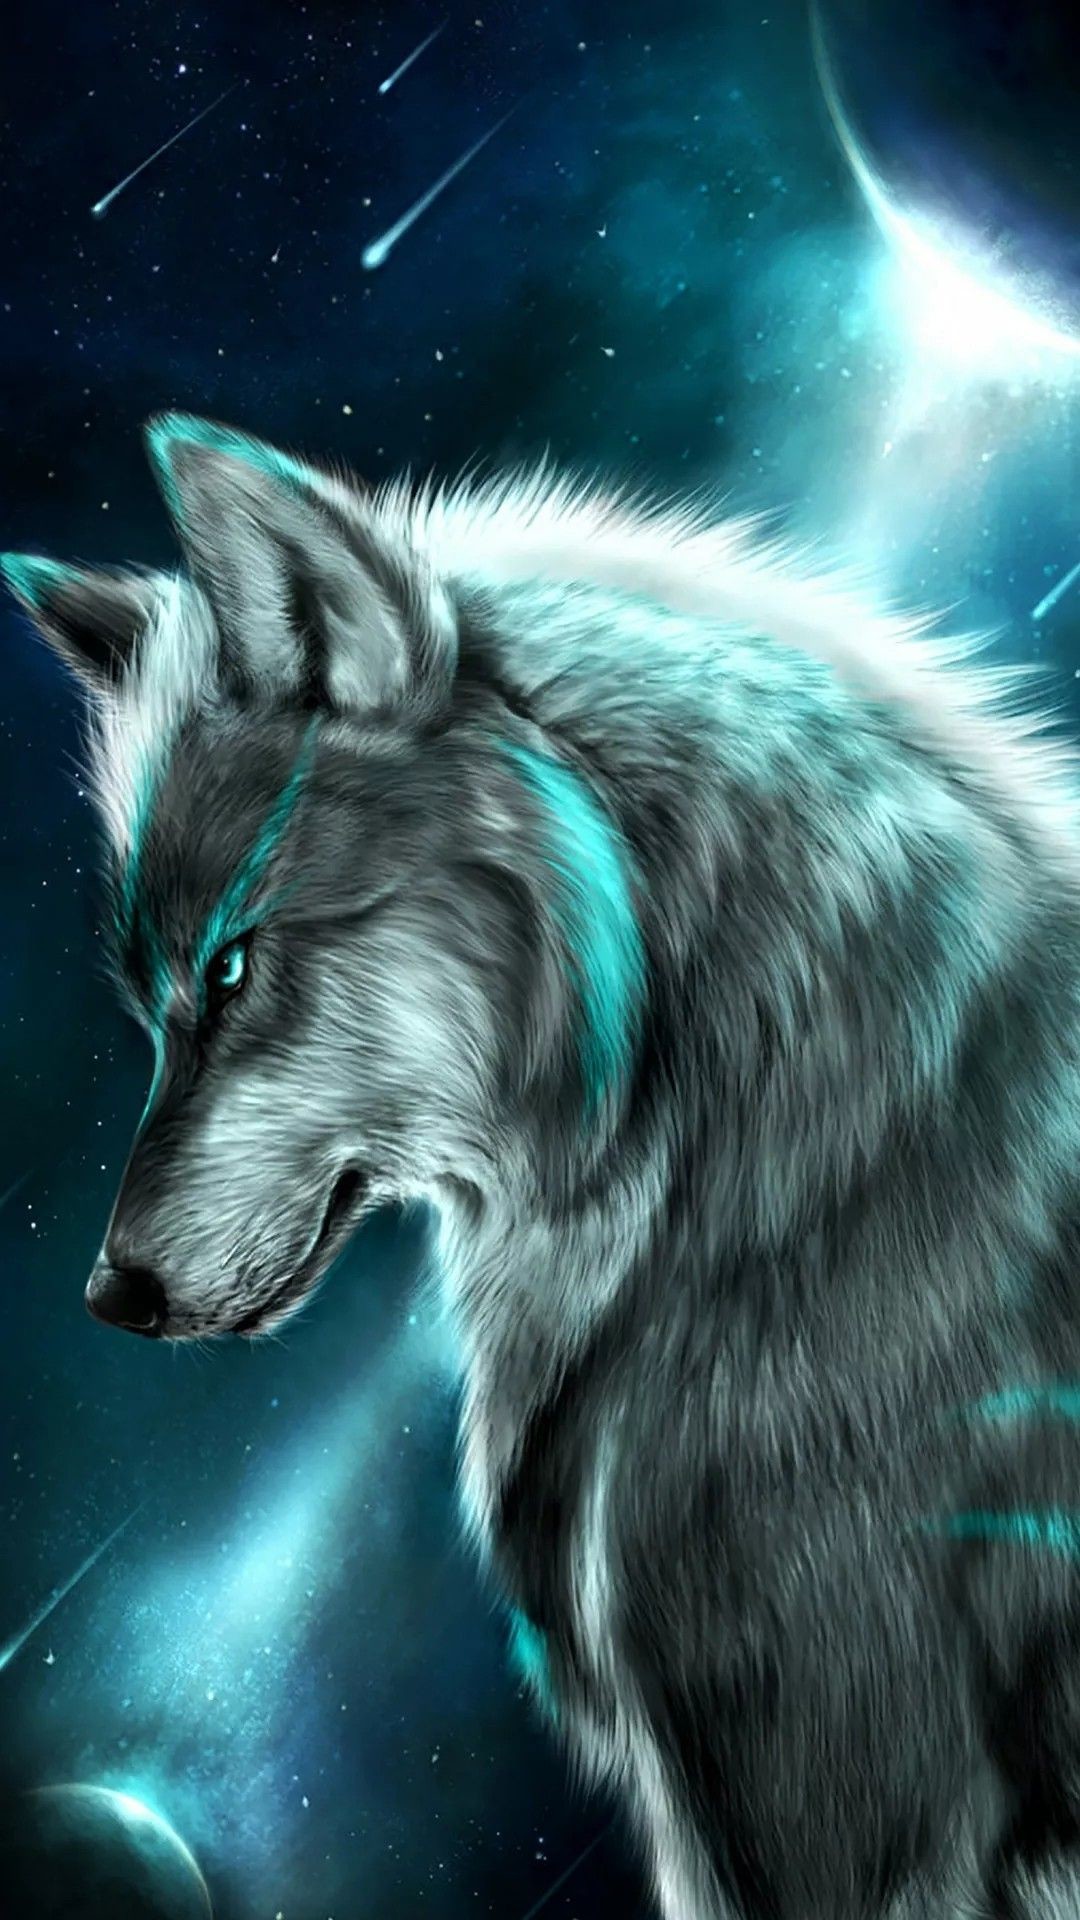 1080x1920 Sad wolf wallpaper #nature